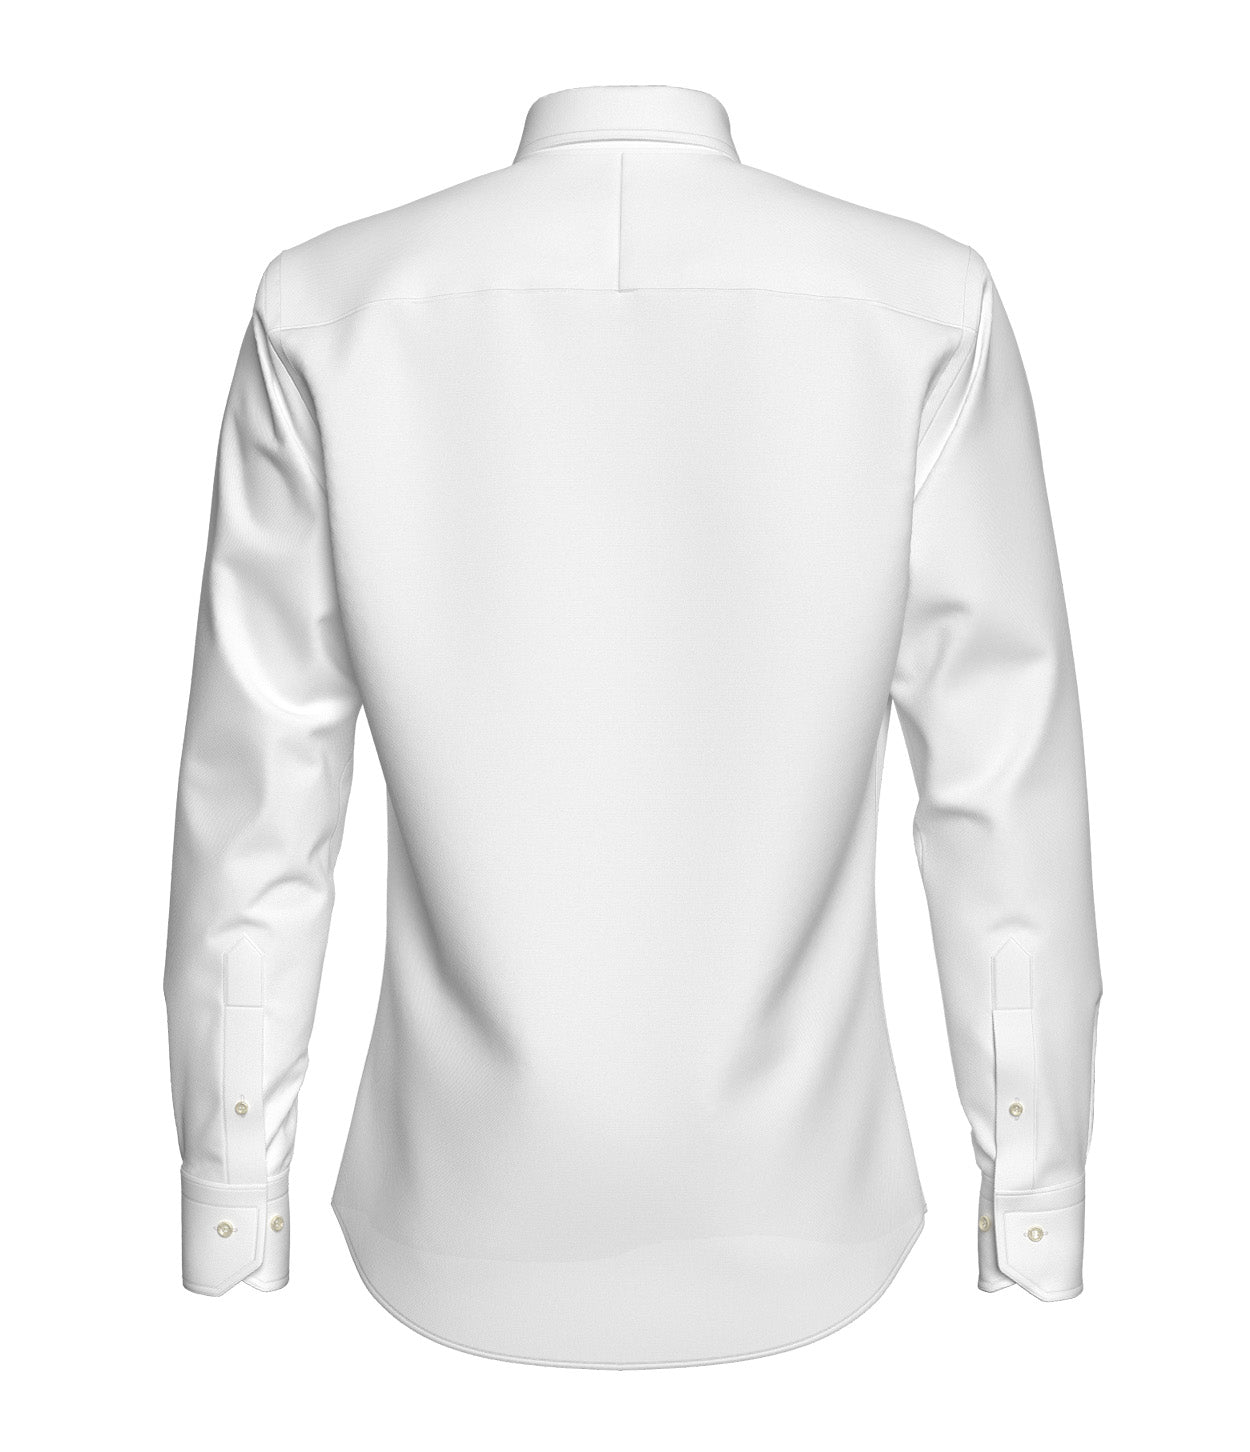 modelado digital posterior camisa blanca 